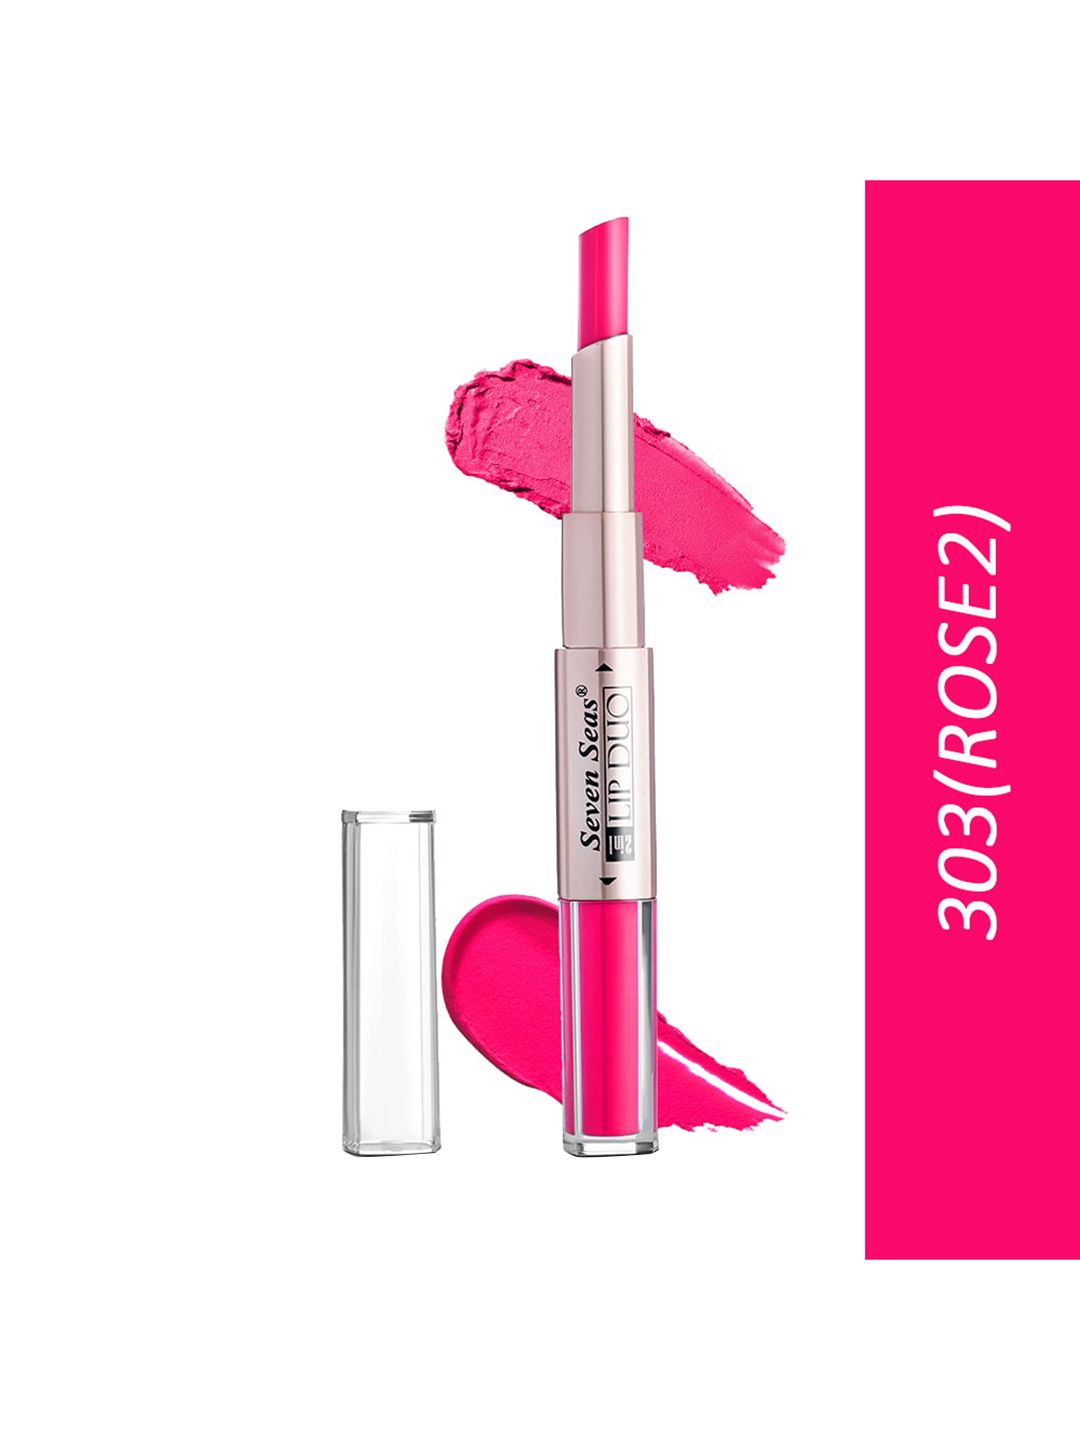 Seven Seas Pink Lip Duo 2 In 1 Liquid & Stick Lipstick- Rose-II Price in India